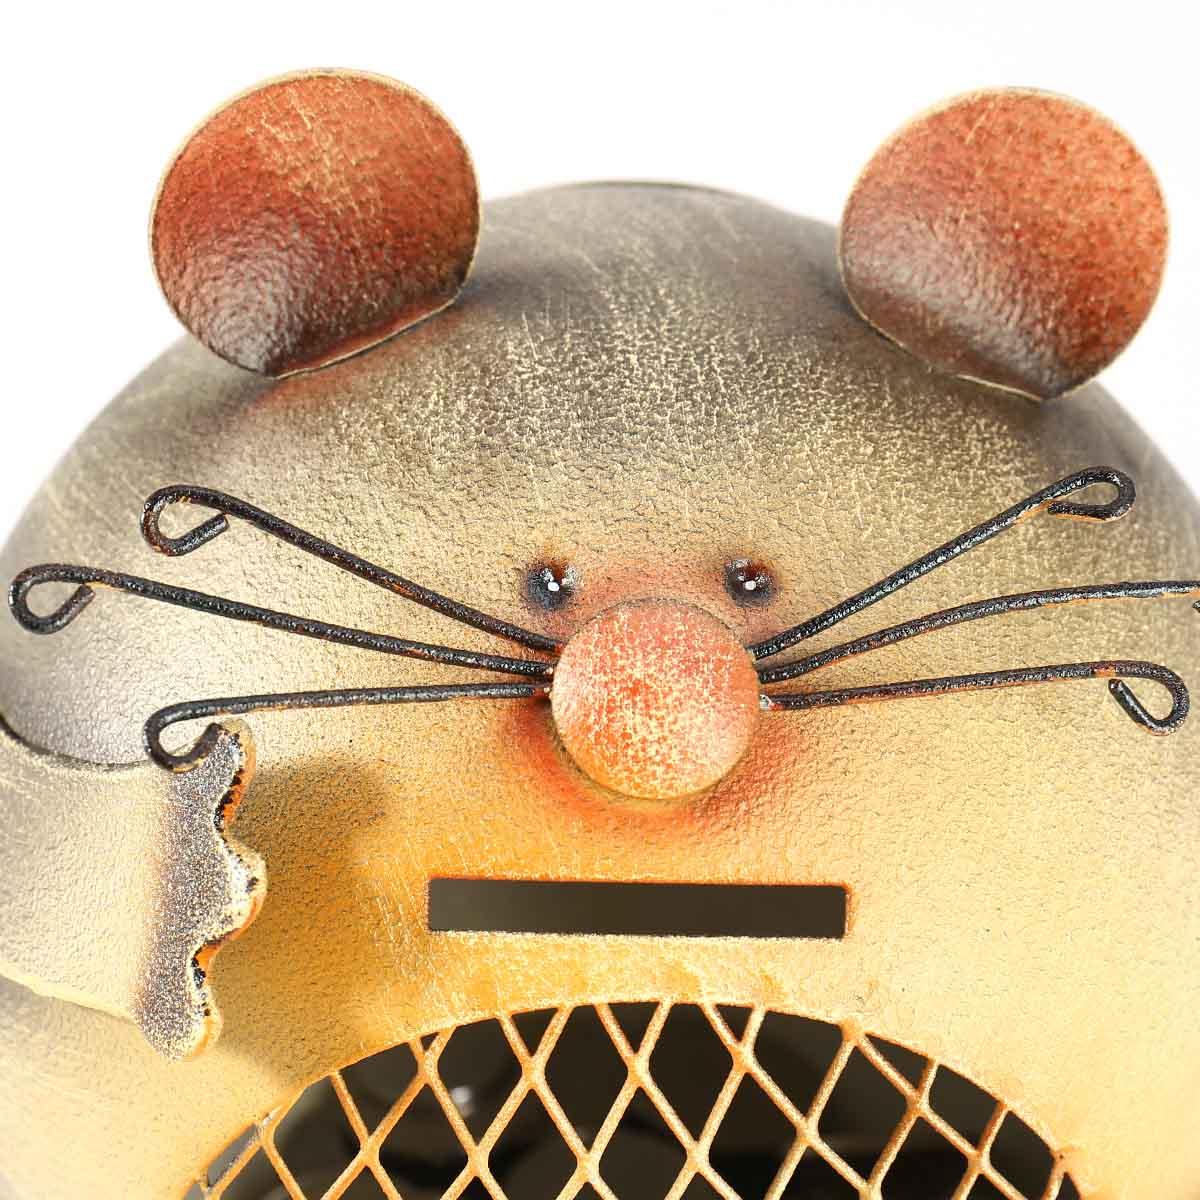 Mouse Piggy Bank - Whimsical Home Decor